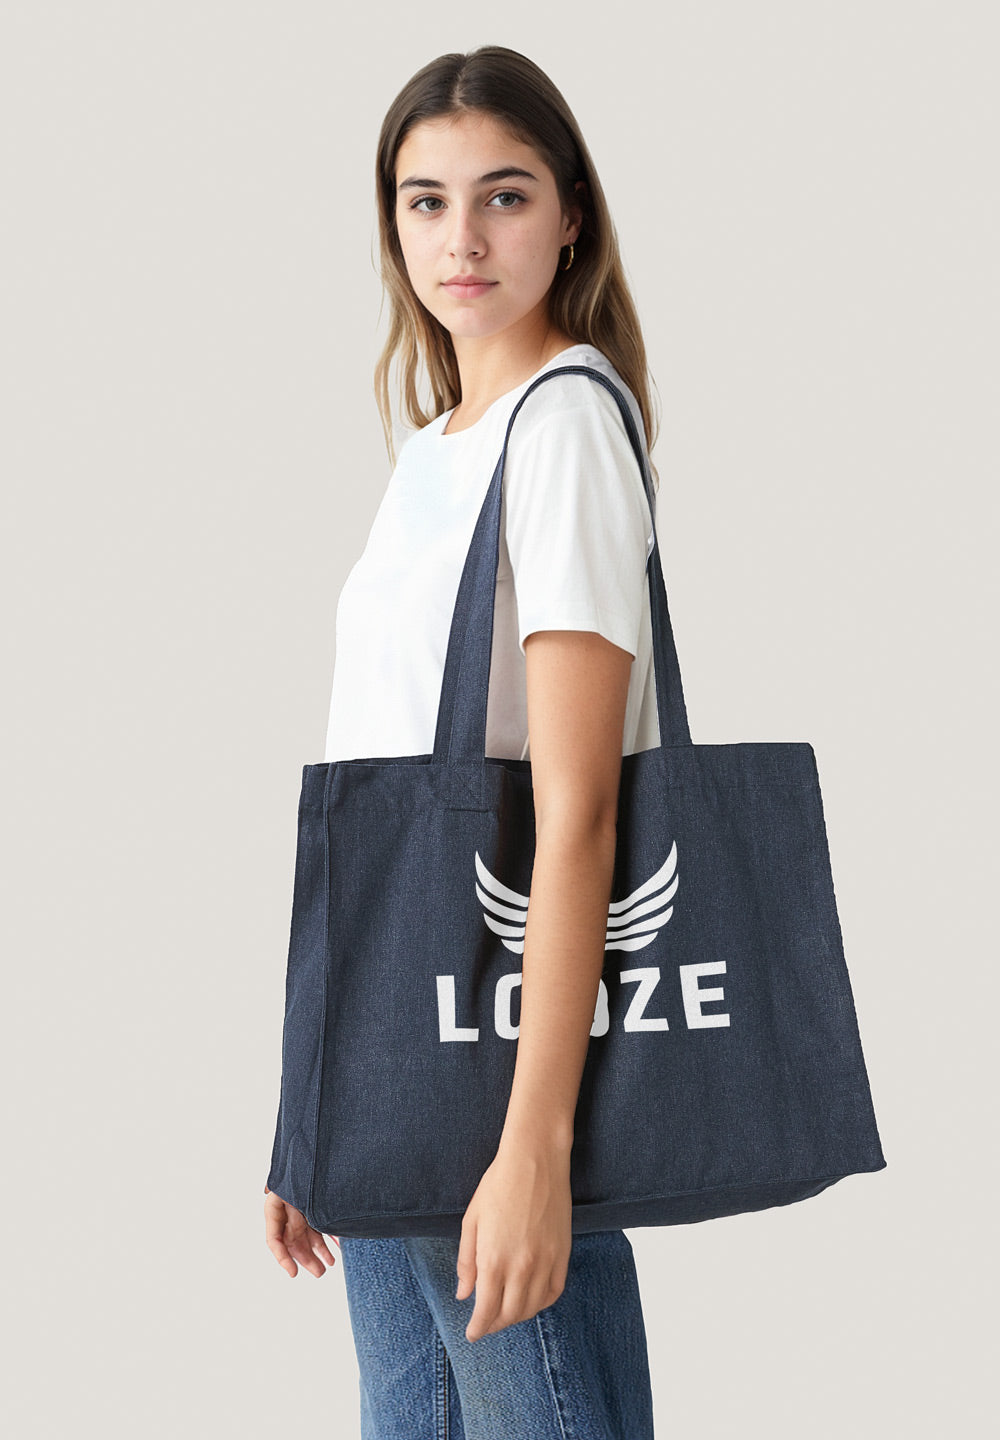 LOOZE Shopping Bag